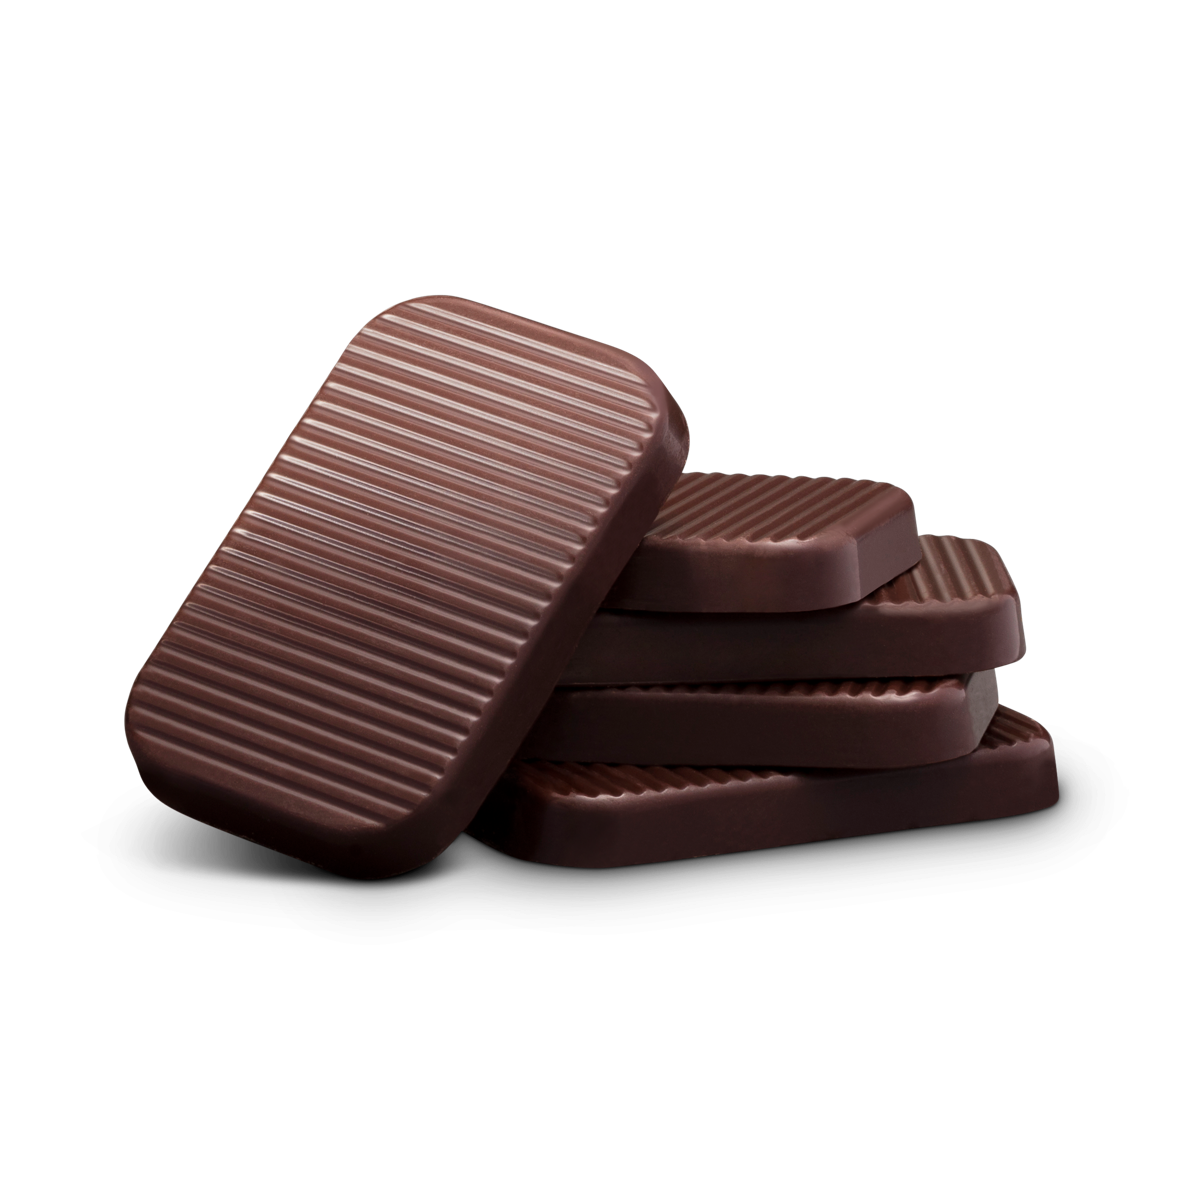 Belgian Dark Chocolate Napolitains (72% Cacao) 32 OZ (2 LB/910g)